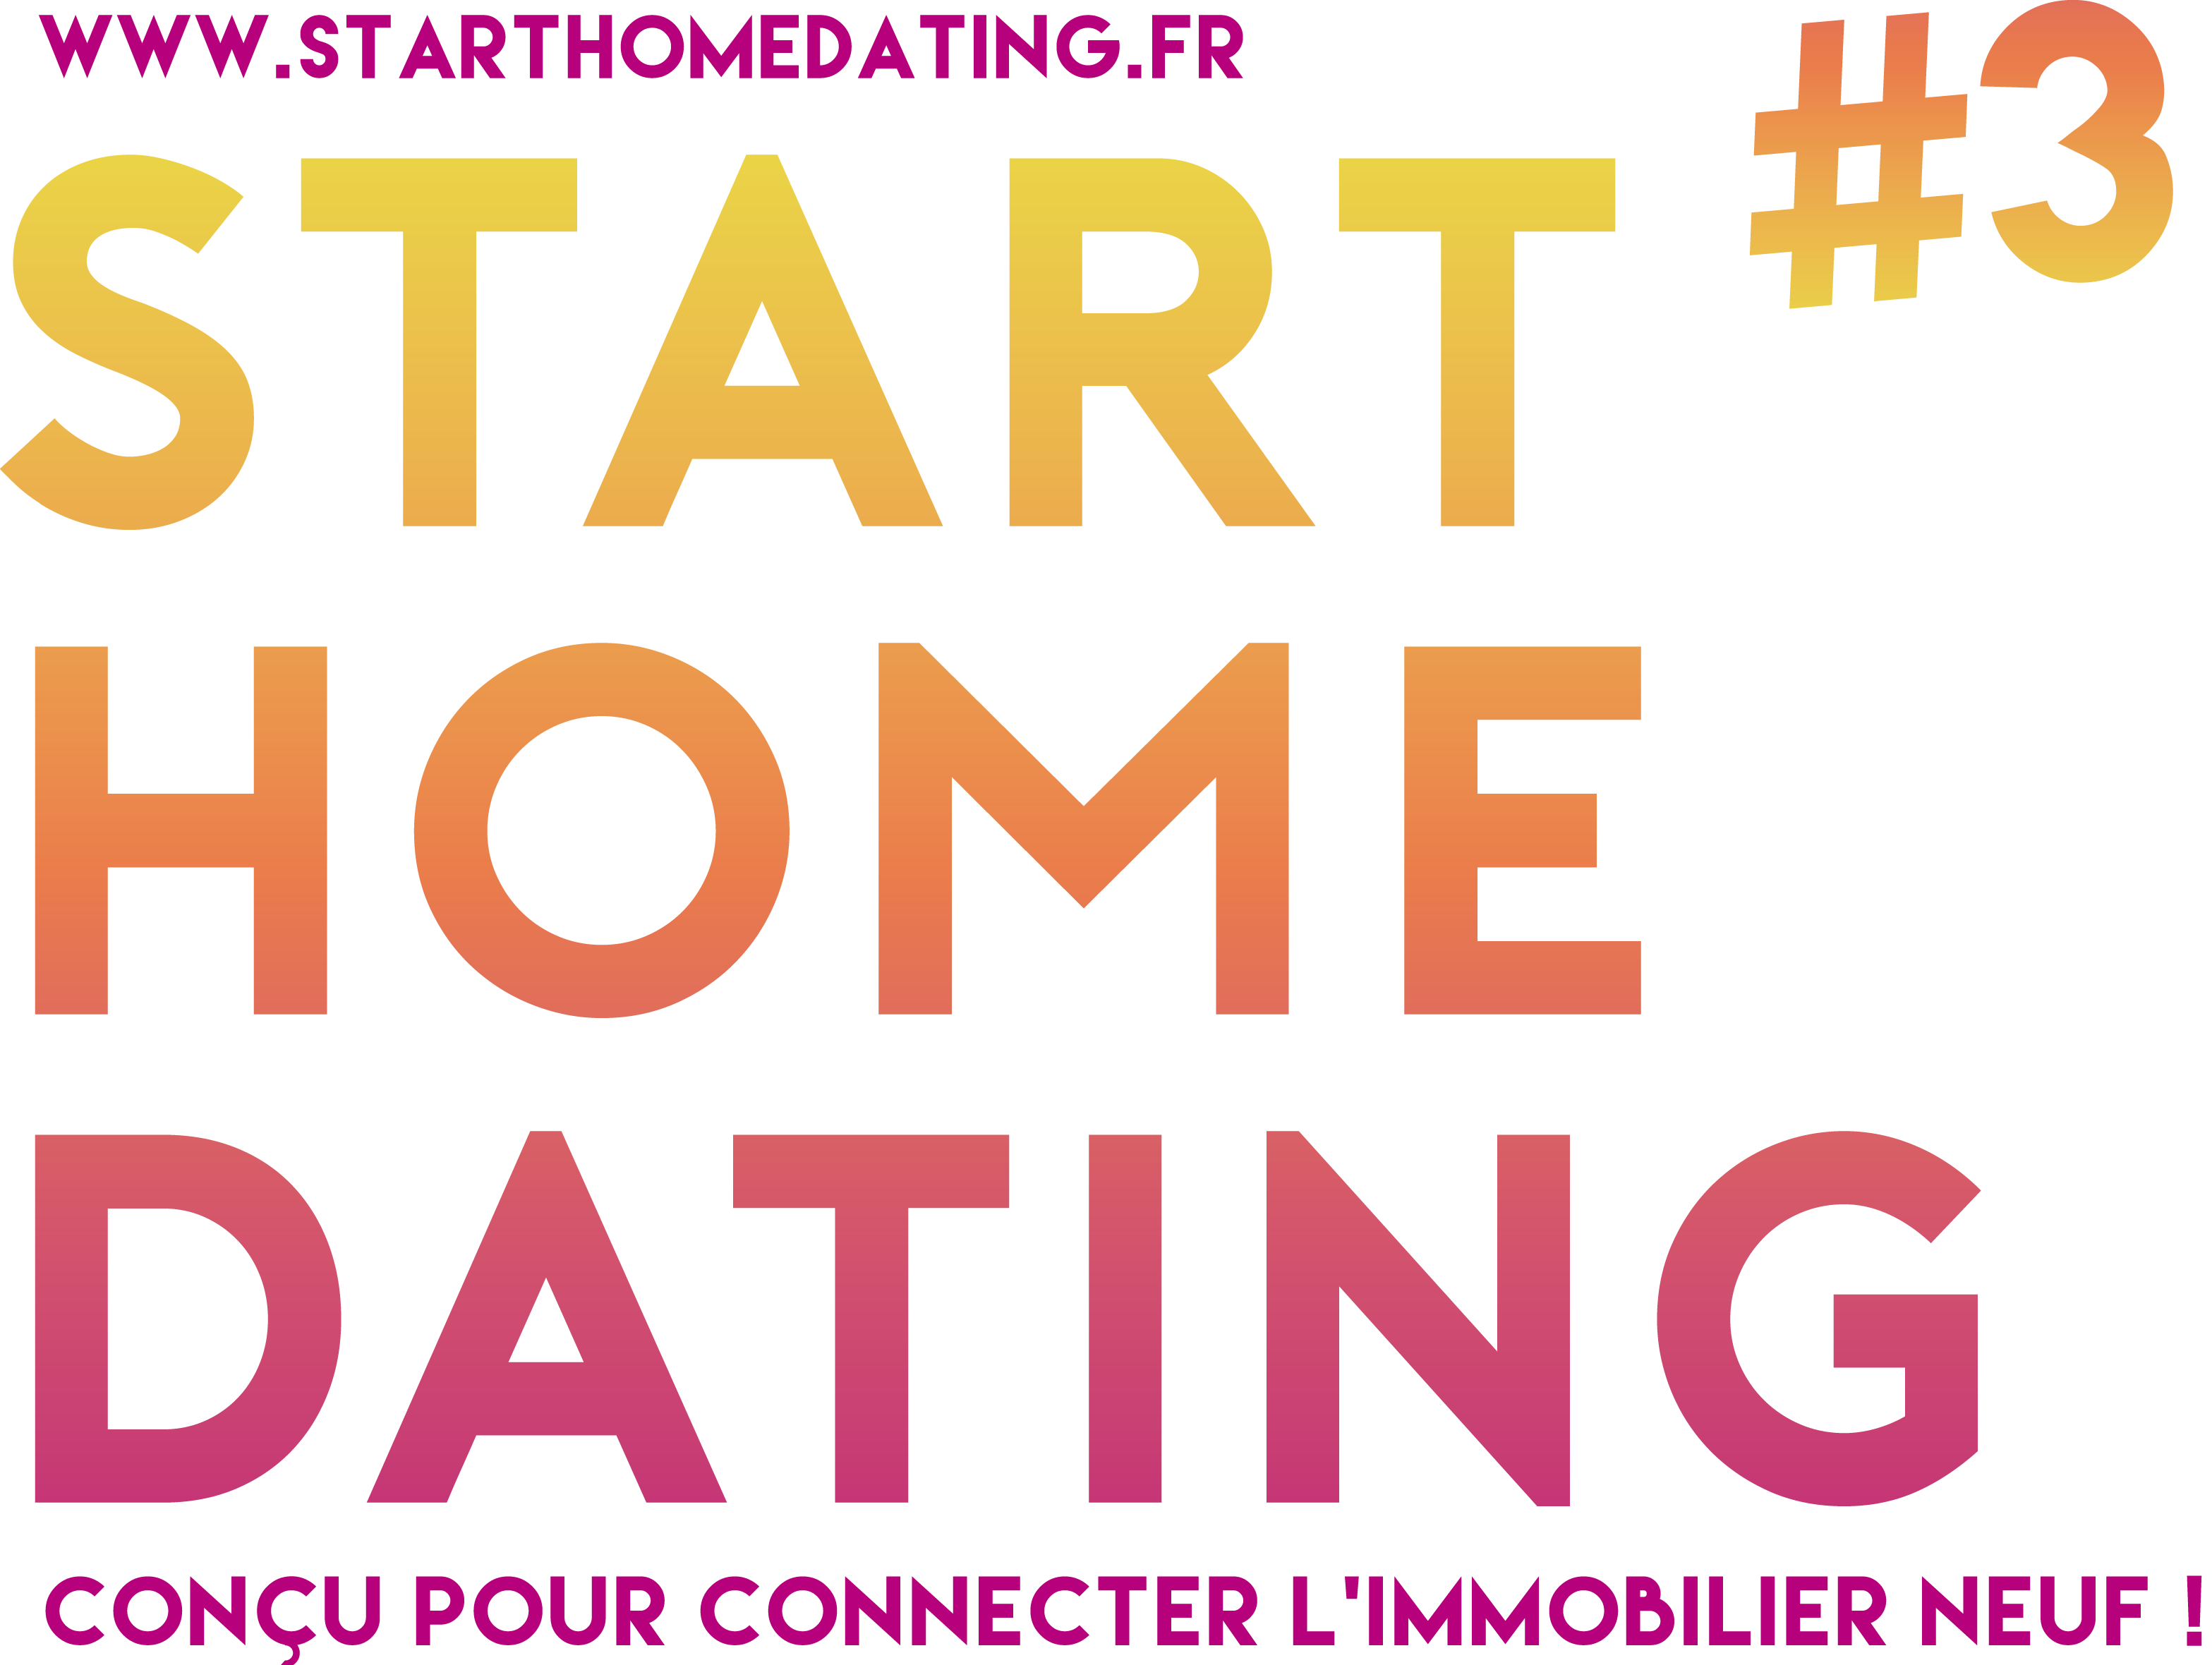 start home dating bandeau